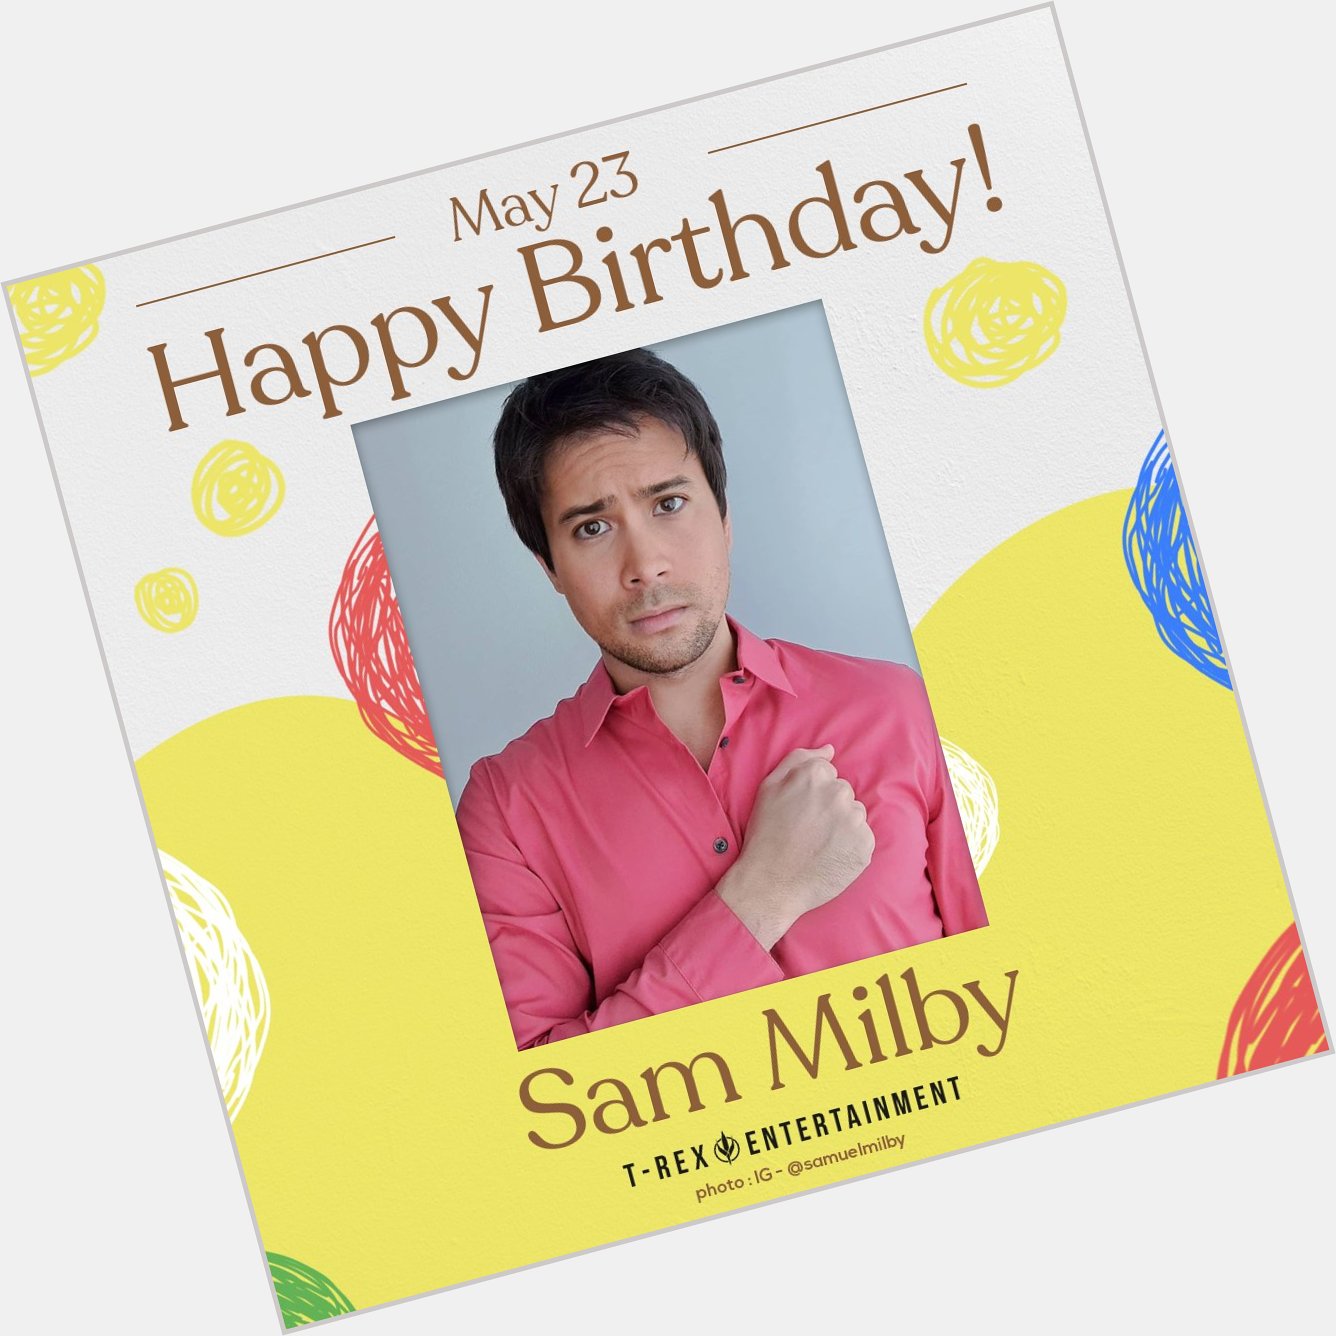 Happy birthday, Sam Milby! Enjoy your very special day! 